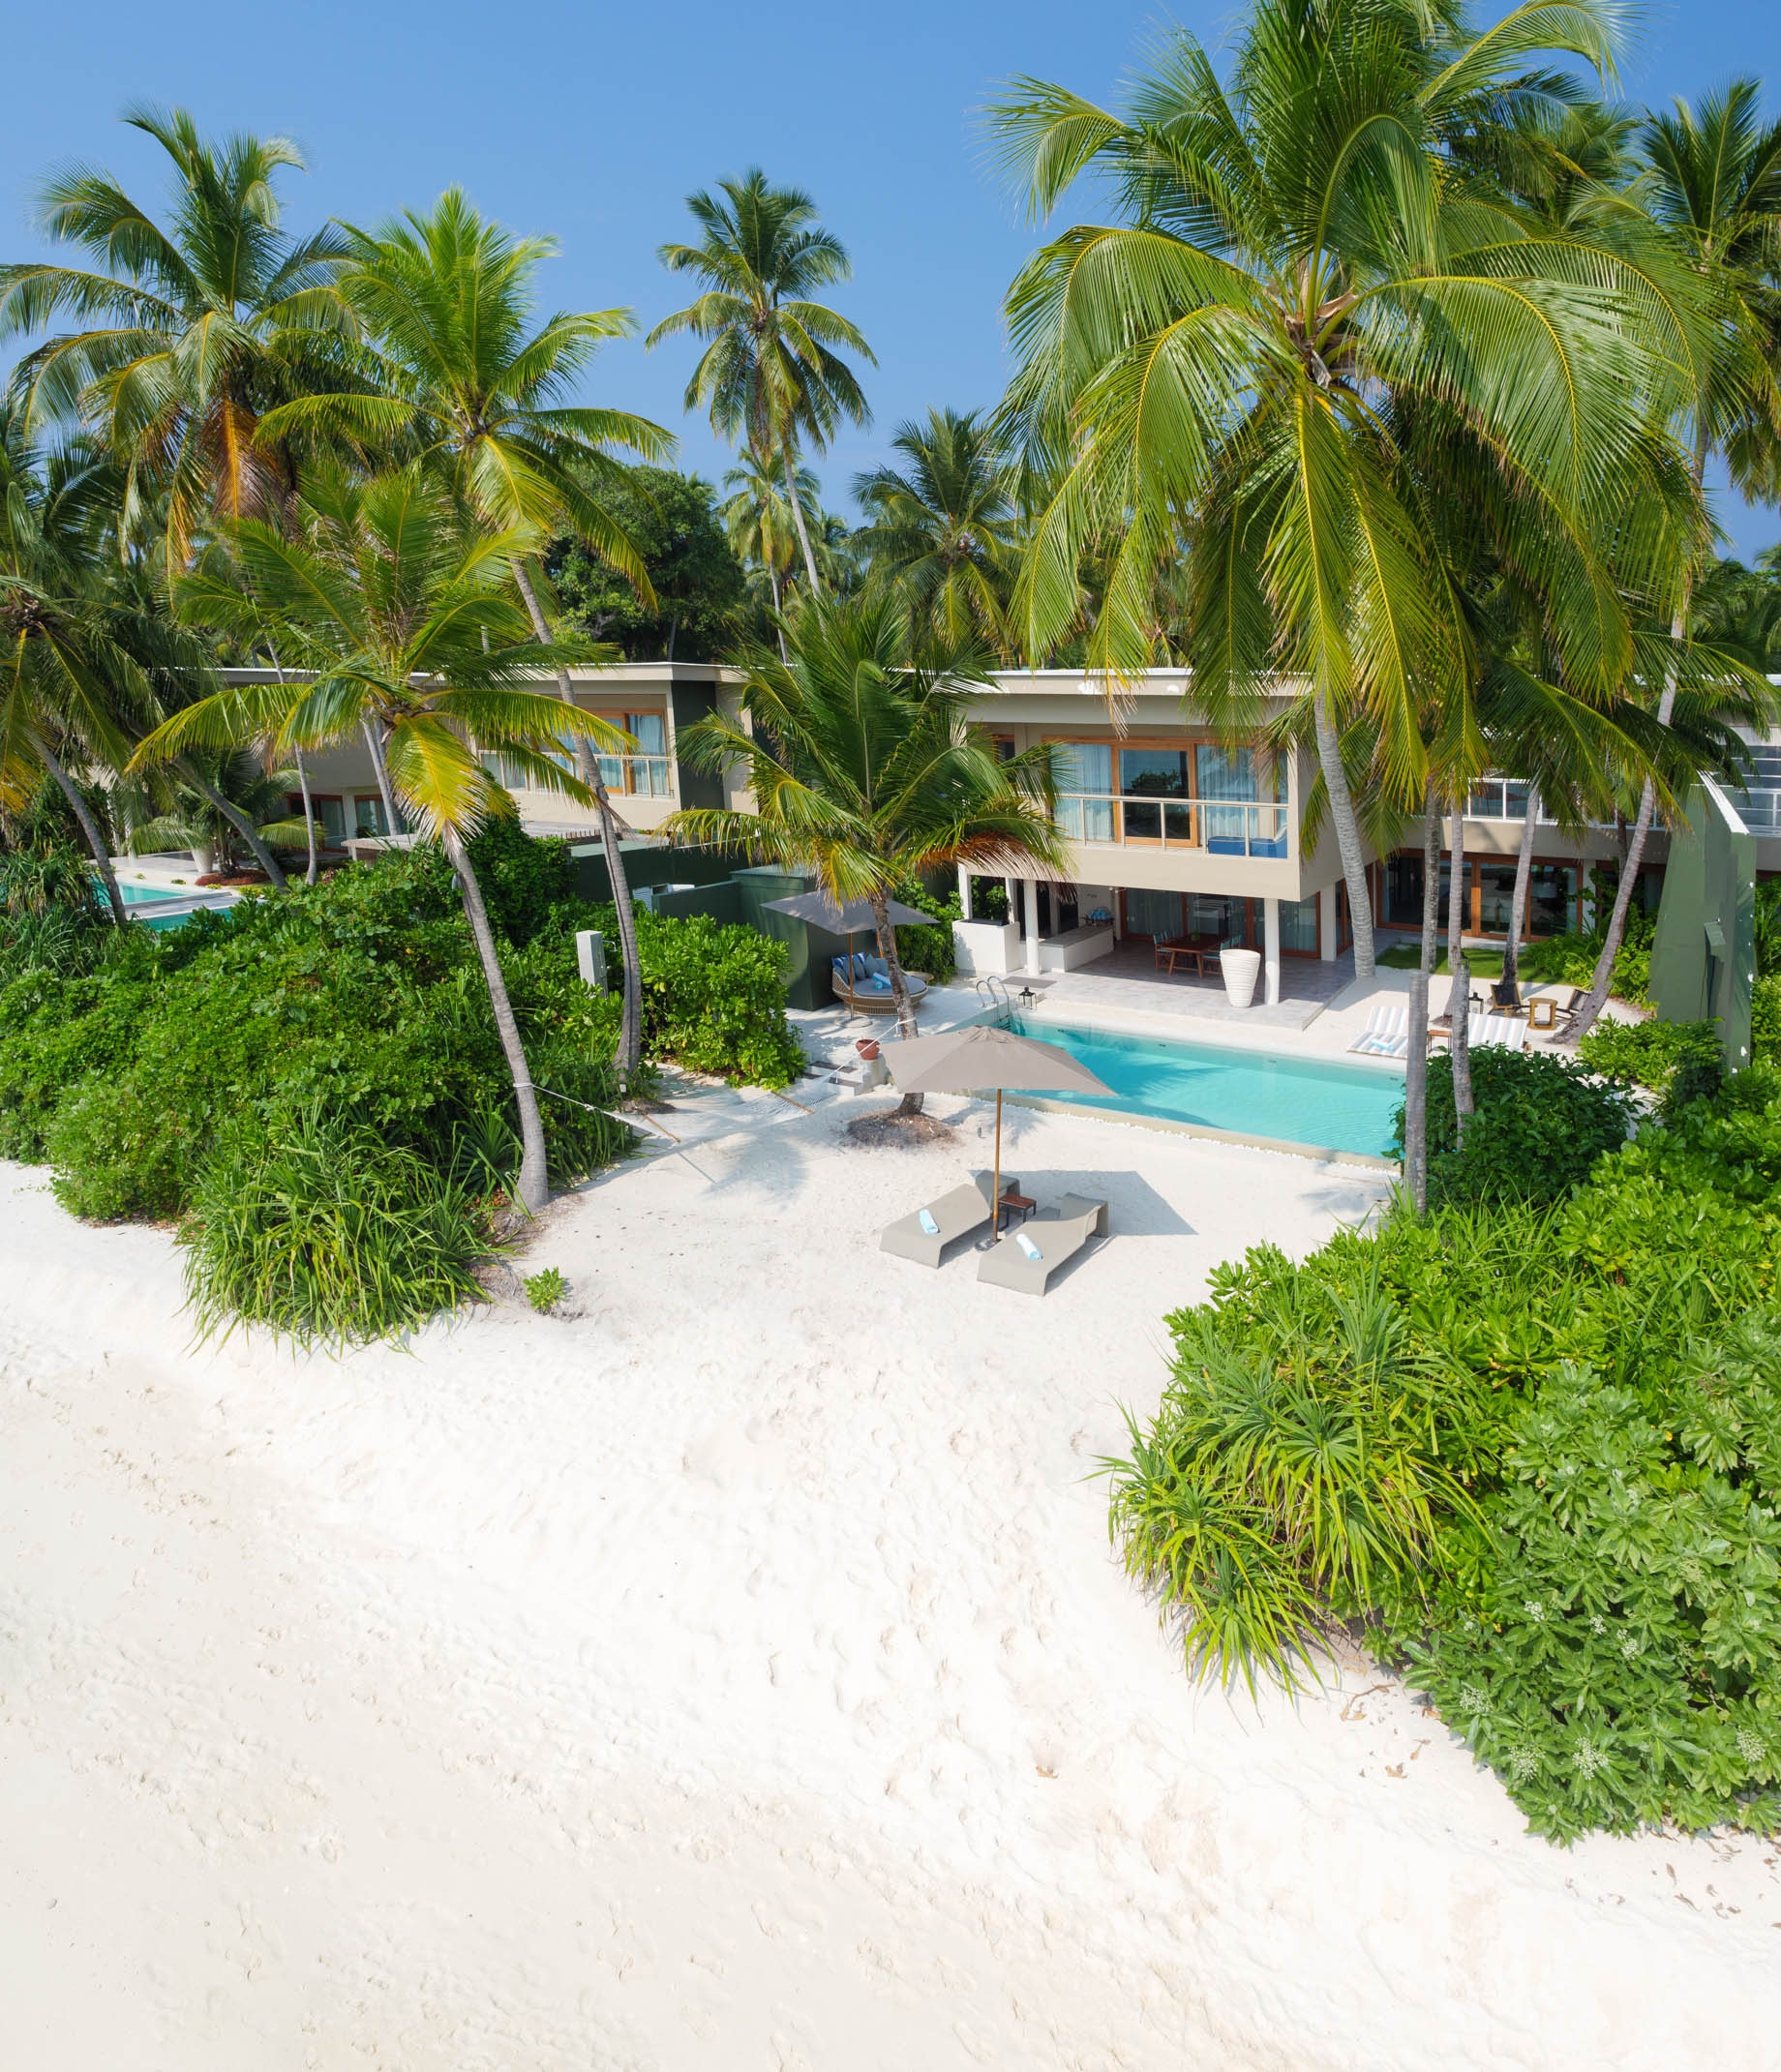 Amilla Fushi Resort and Residences - Baa Atoll, Maldives - Oceanfront Beach Villa